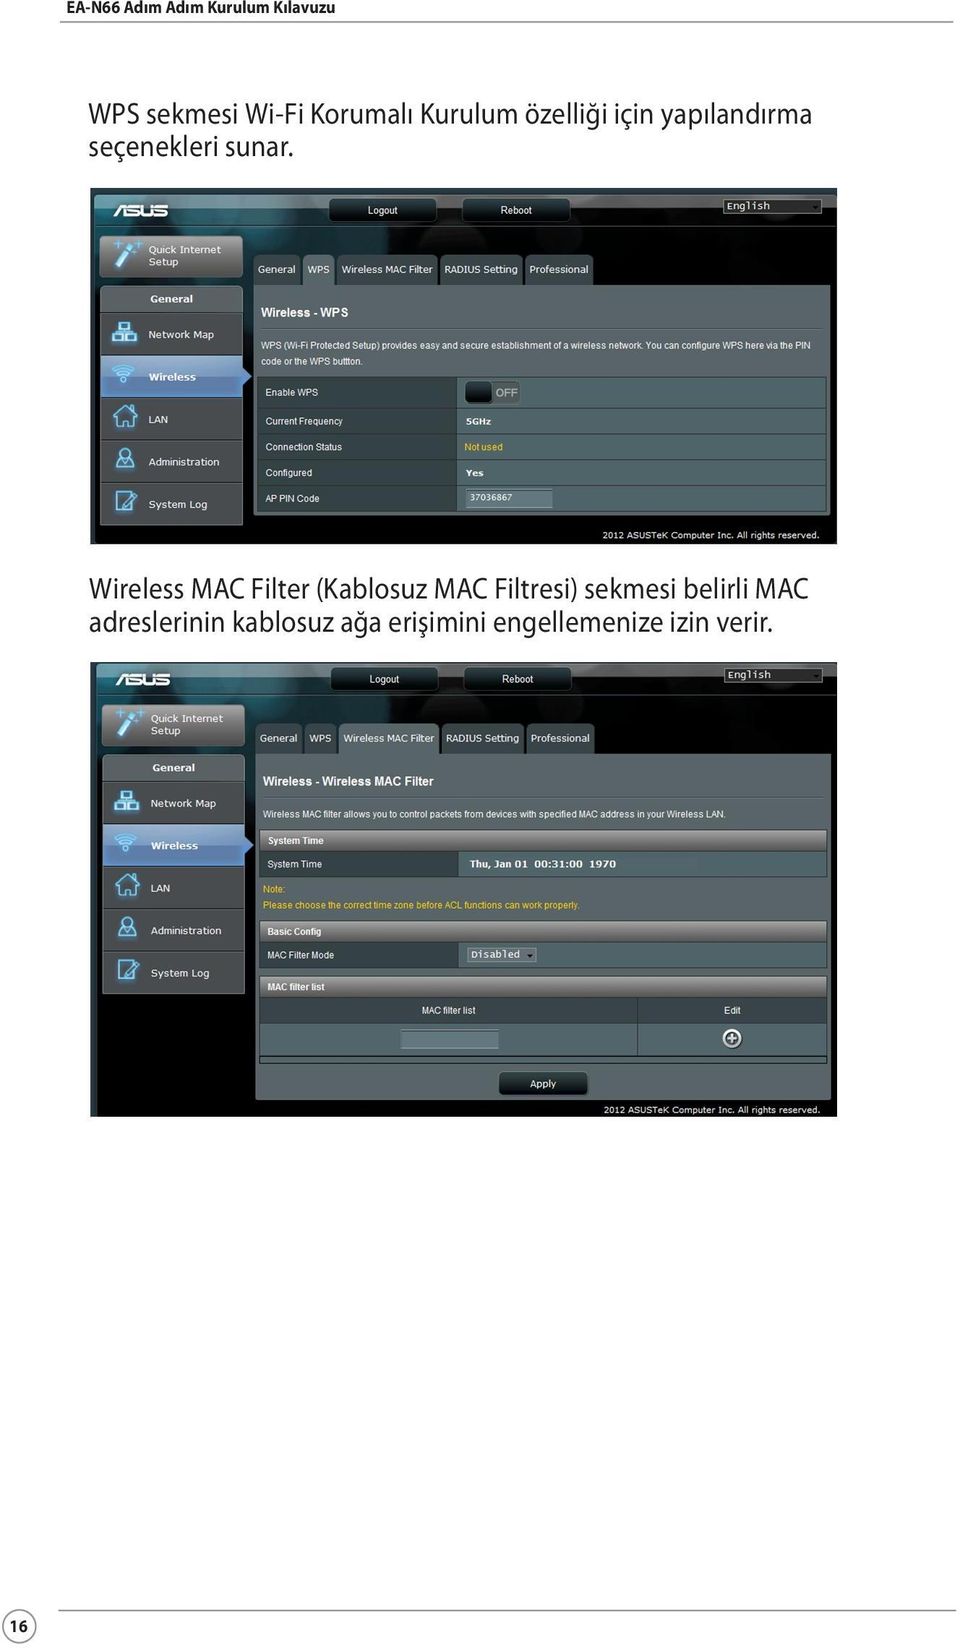 Wireless MAC Filter (Kablosuz MAC Filtresi) sekmesi